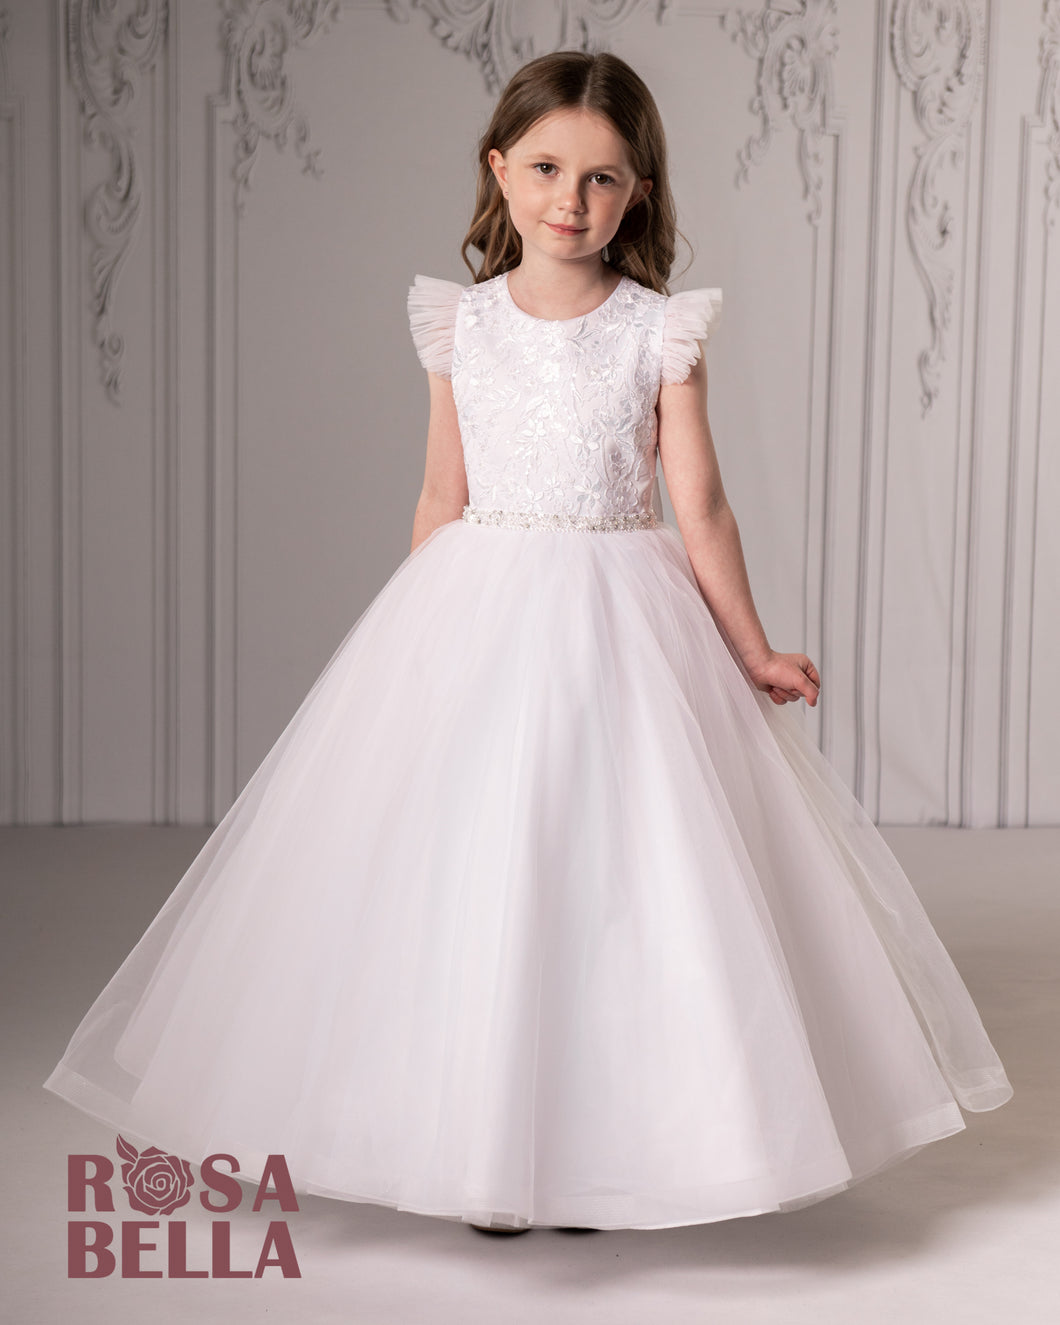 Rosa Bella By Sweetie Pie Girls White Communion Dress:- RB642